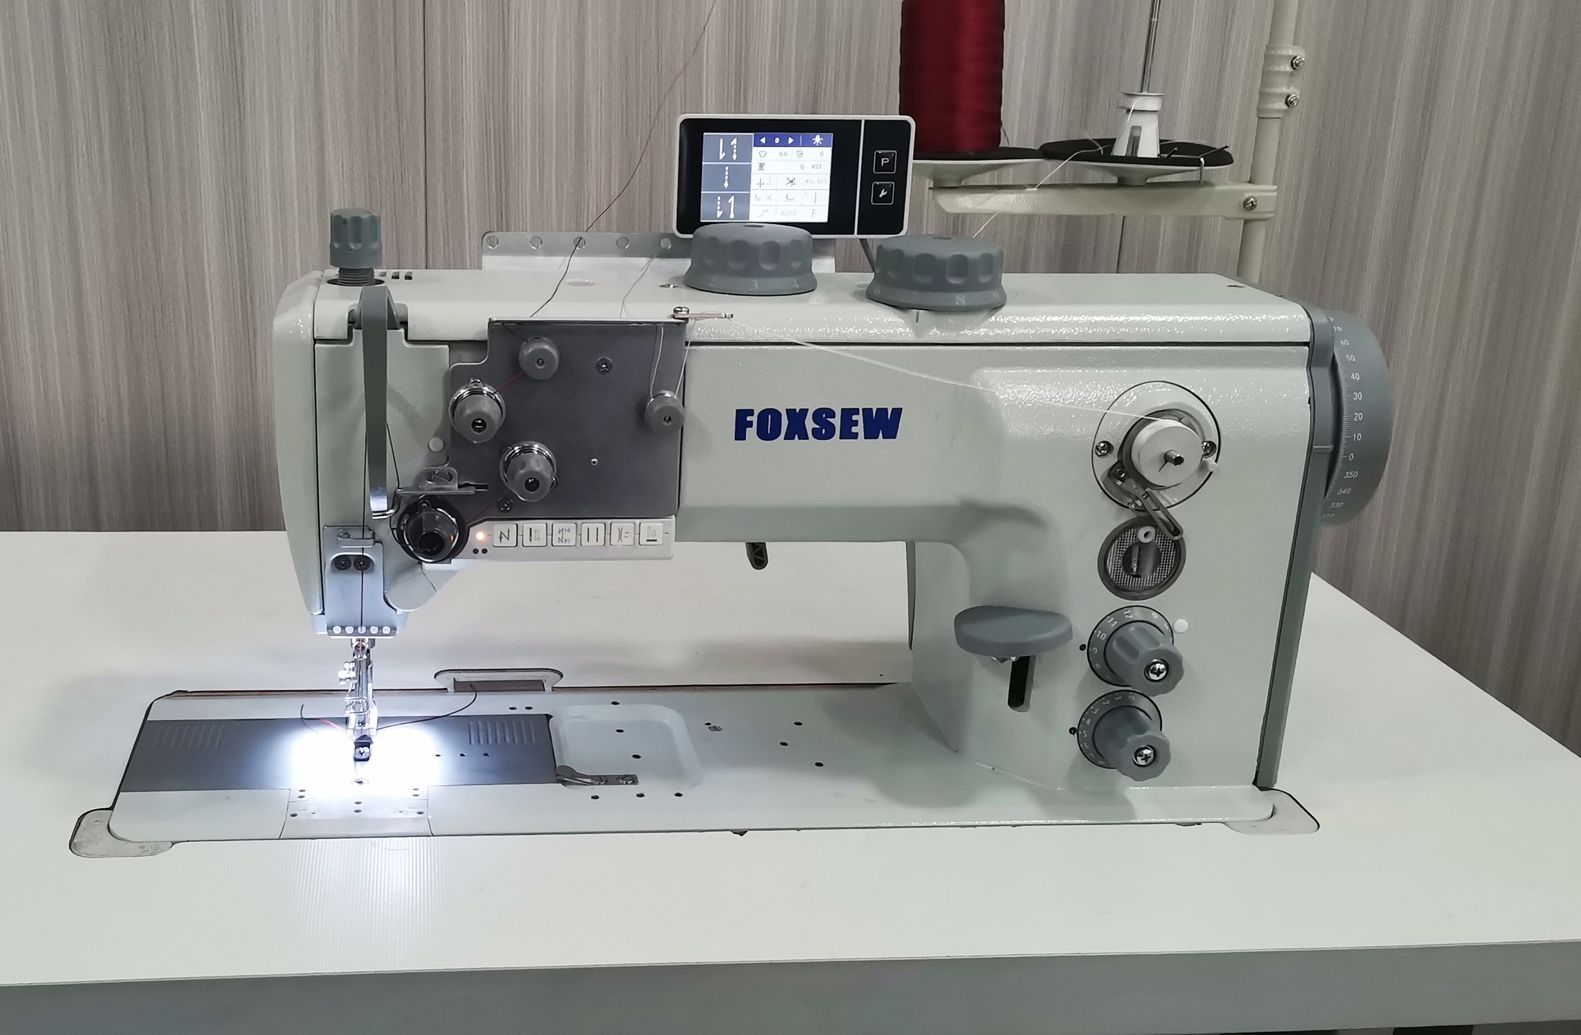 Hand Stitch Sewing Machine - FOXSEW